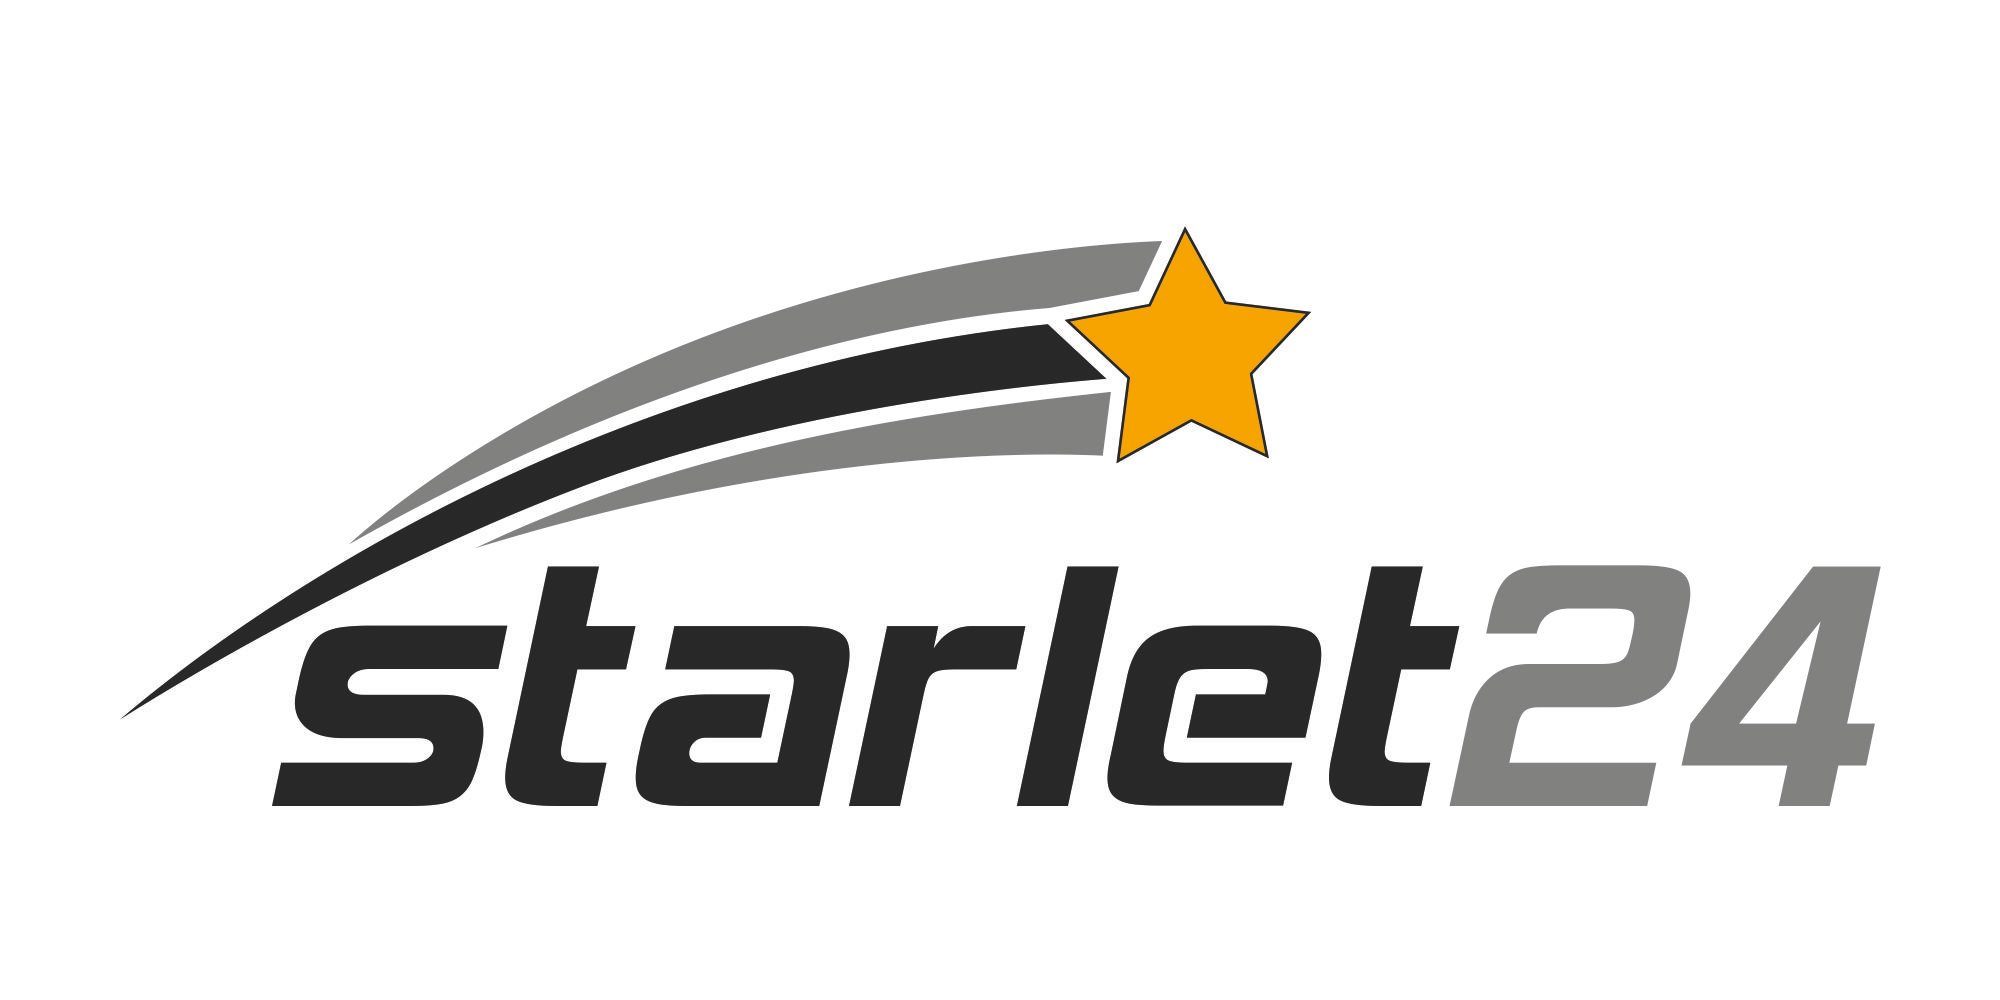 Starlet24